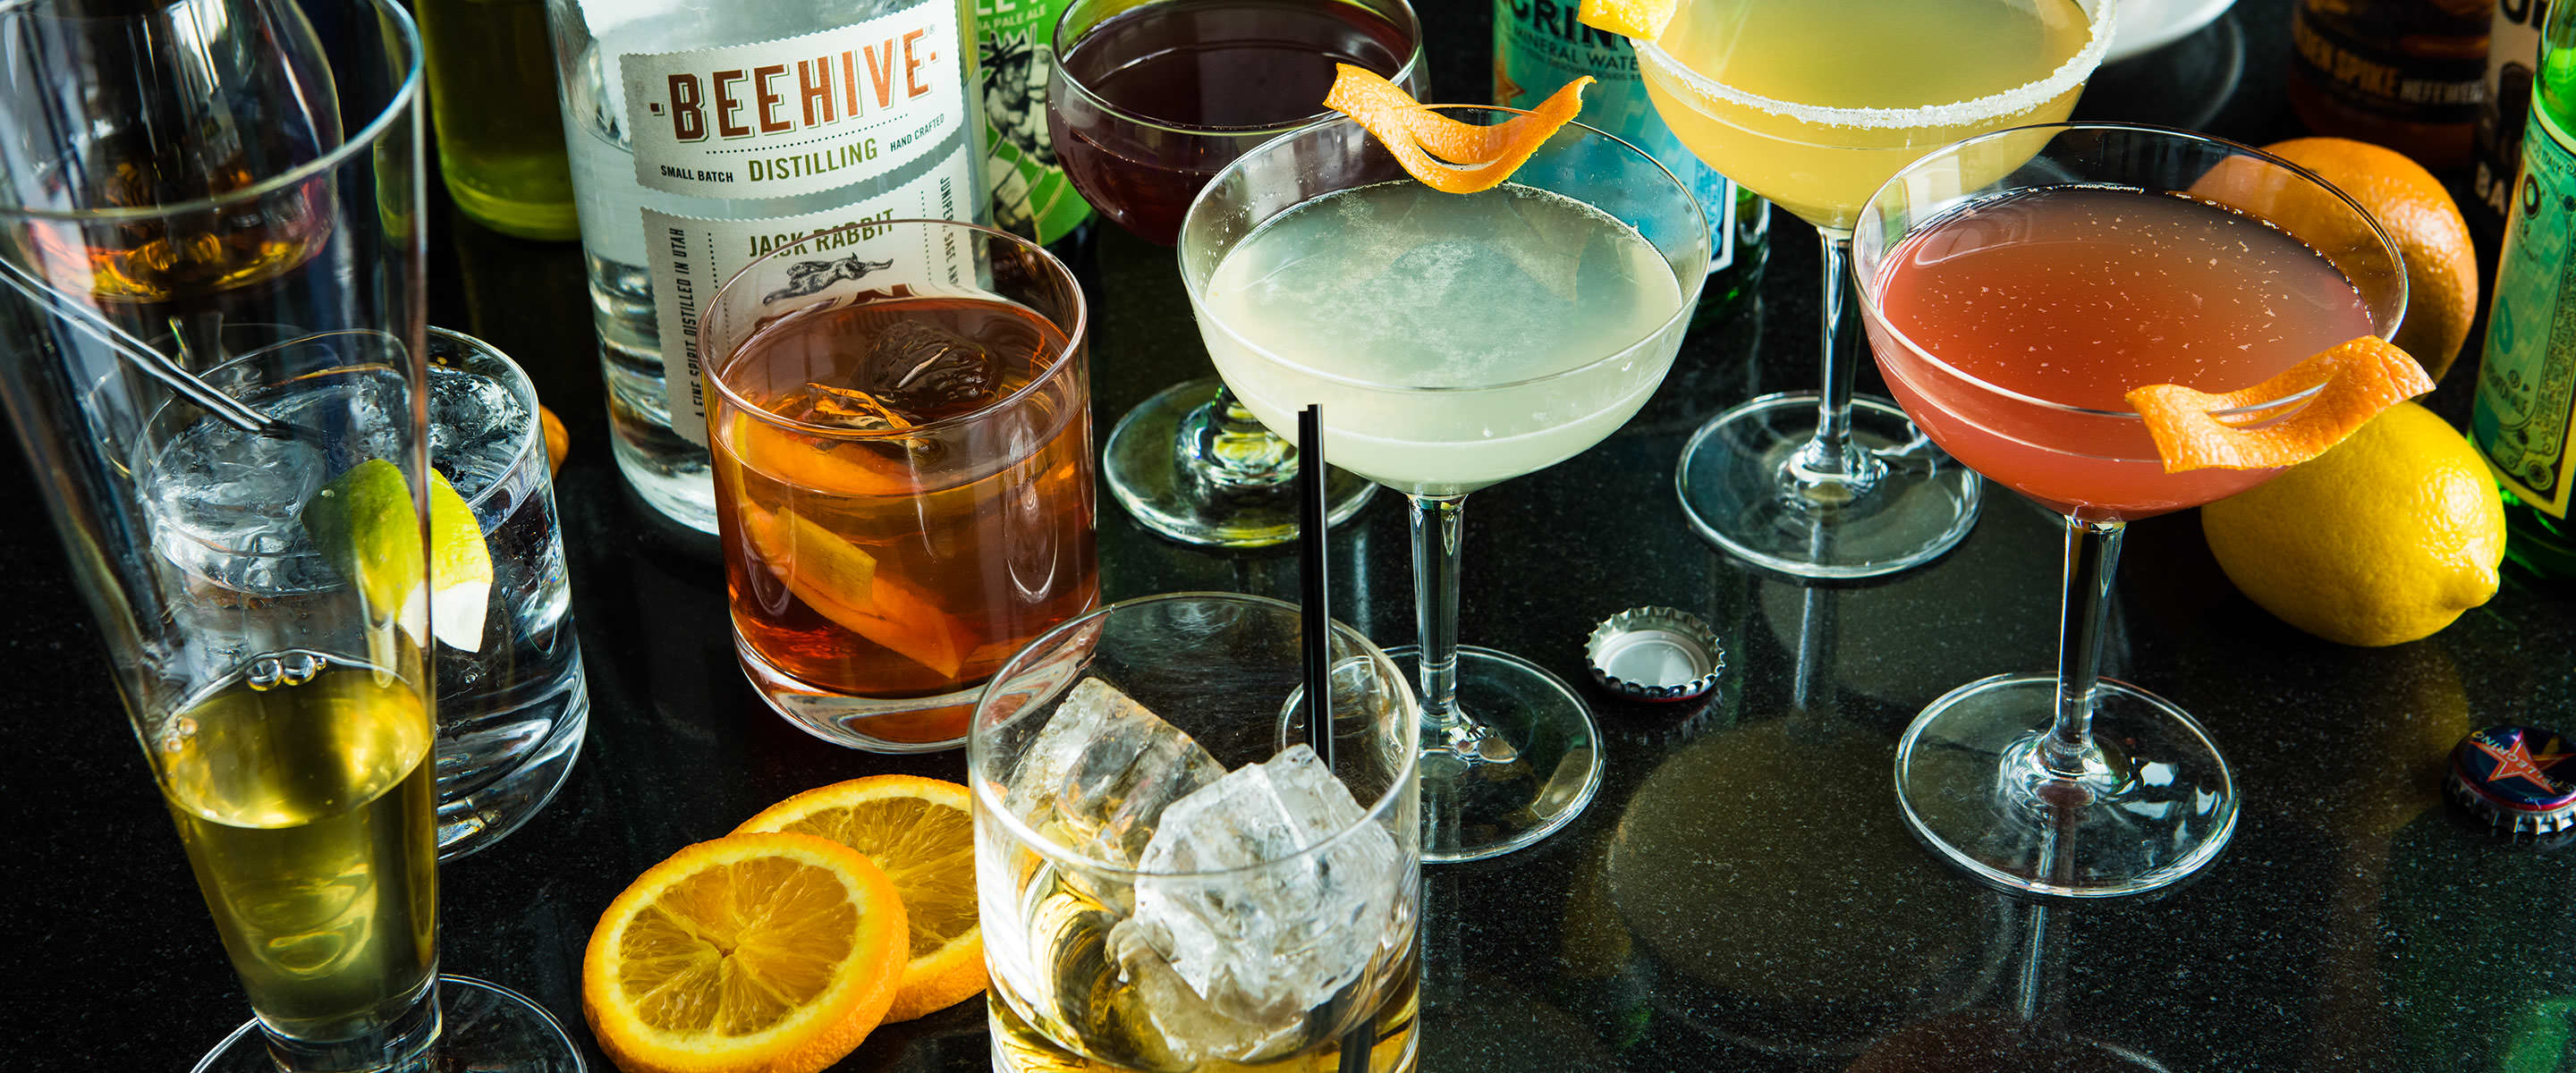 Cocktail drink display with liquor bottles, wine glasses, tumbler glasses and orange garnish.